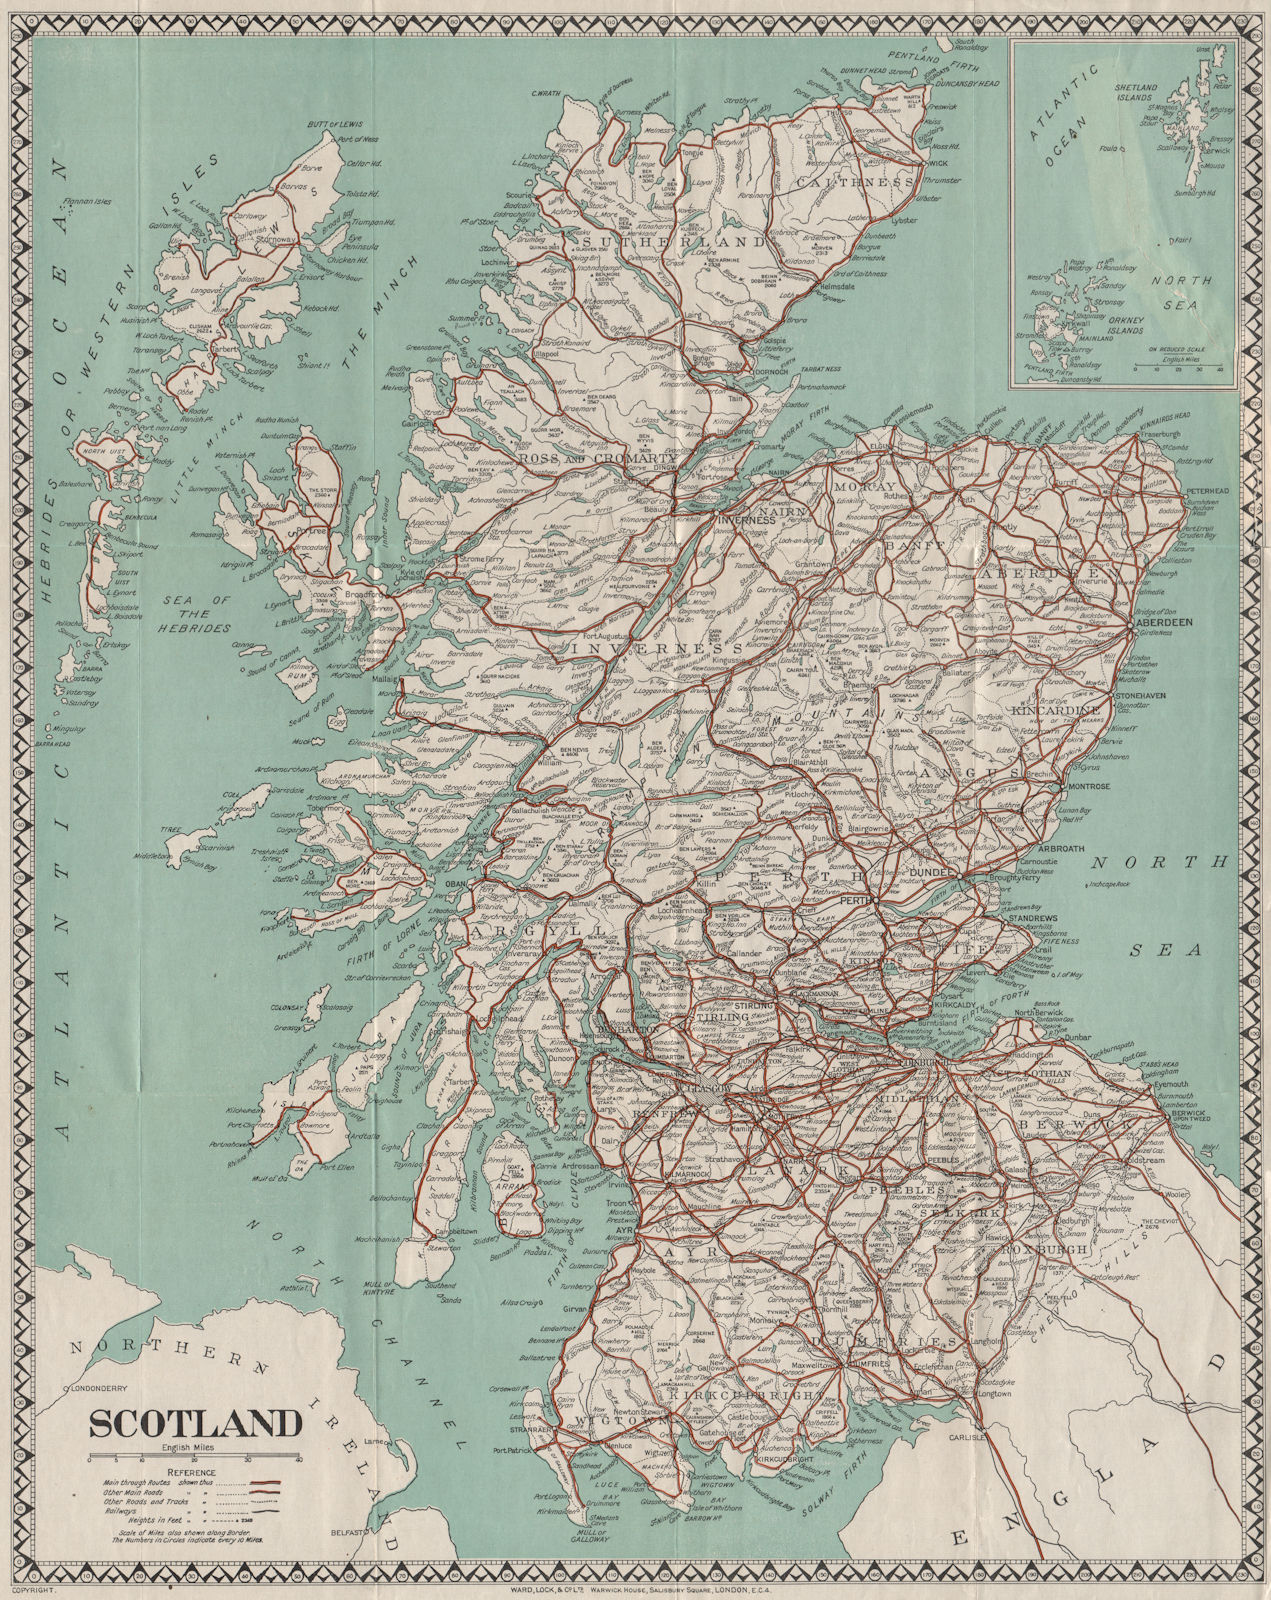 Associate Product SCOTLAND main roads & railways. Decorative border. WARD LOCK 1935 old map